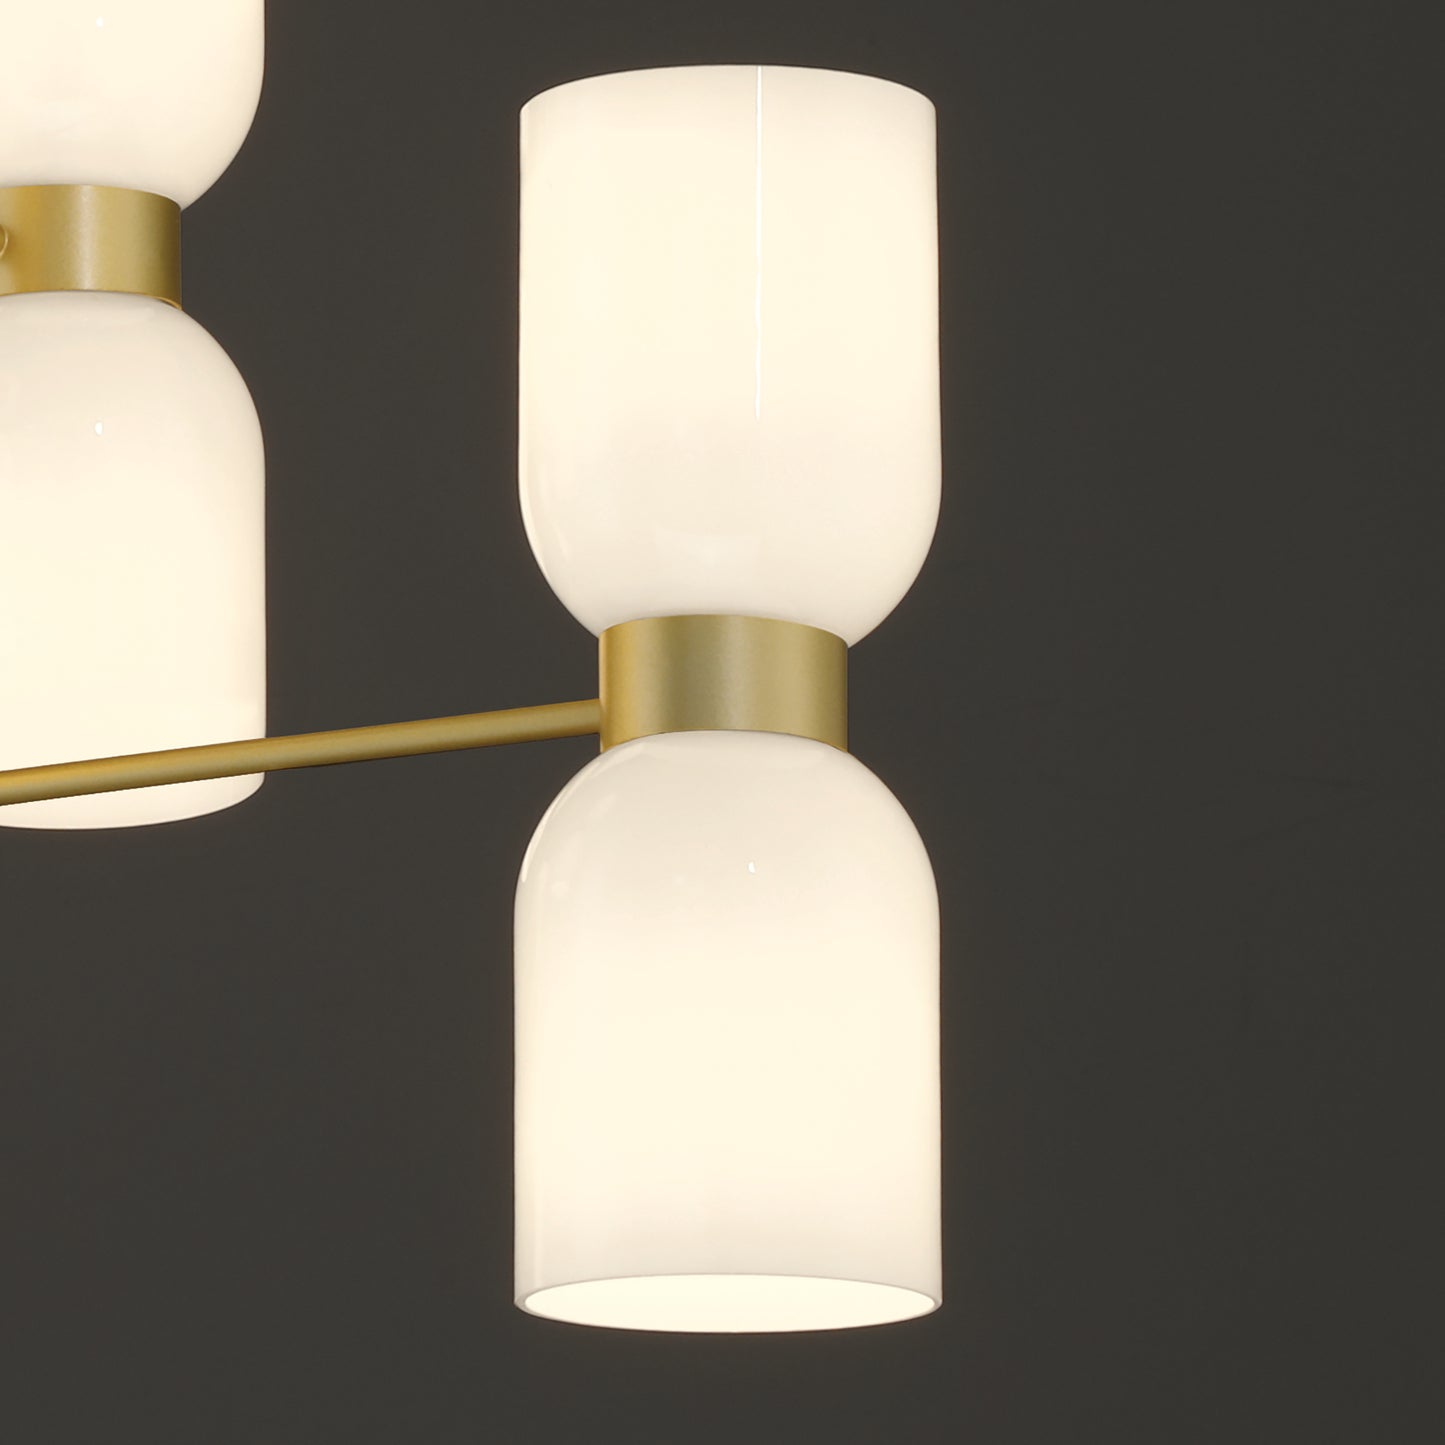 8 light modern linear chandelier (7) by ACROMA